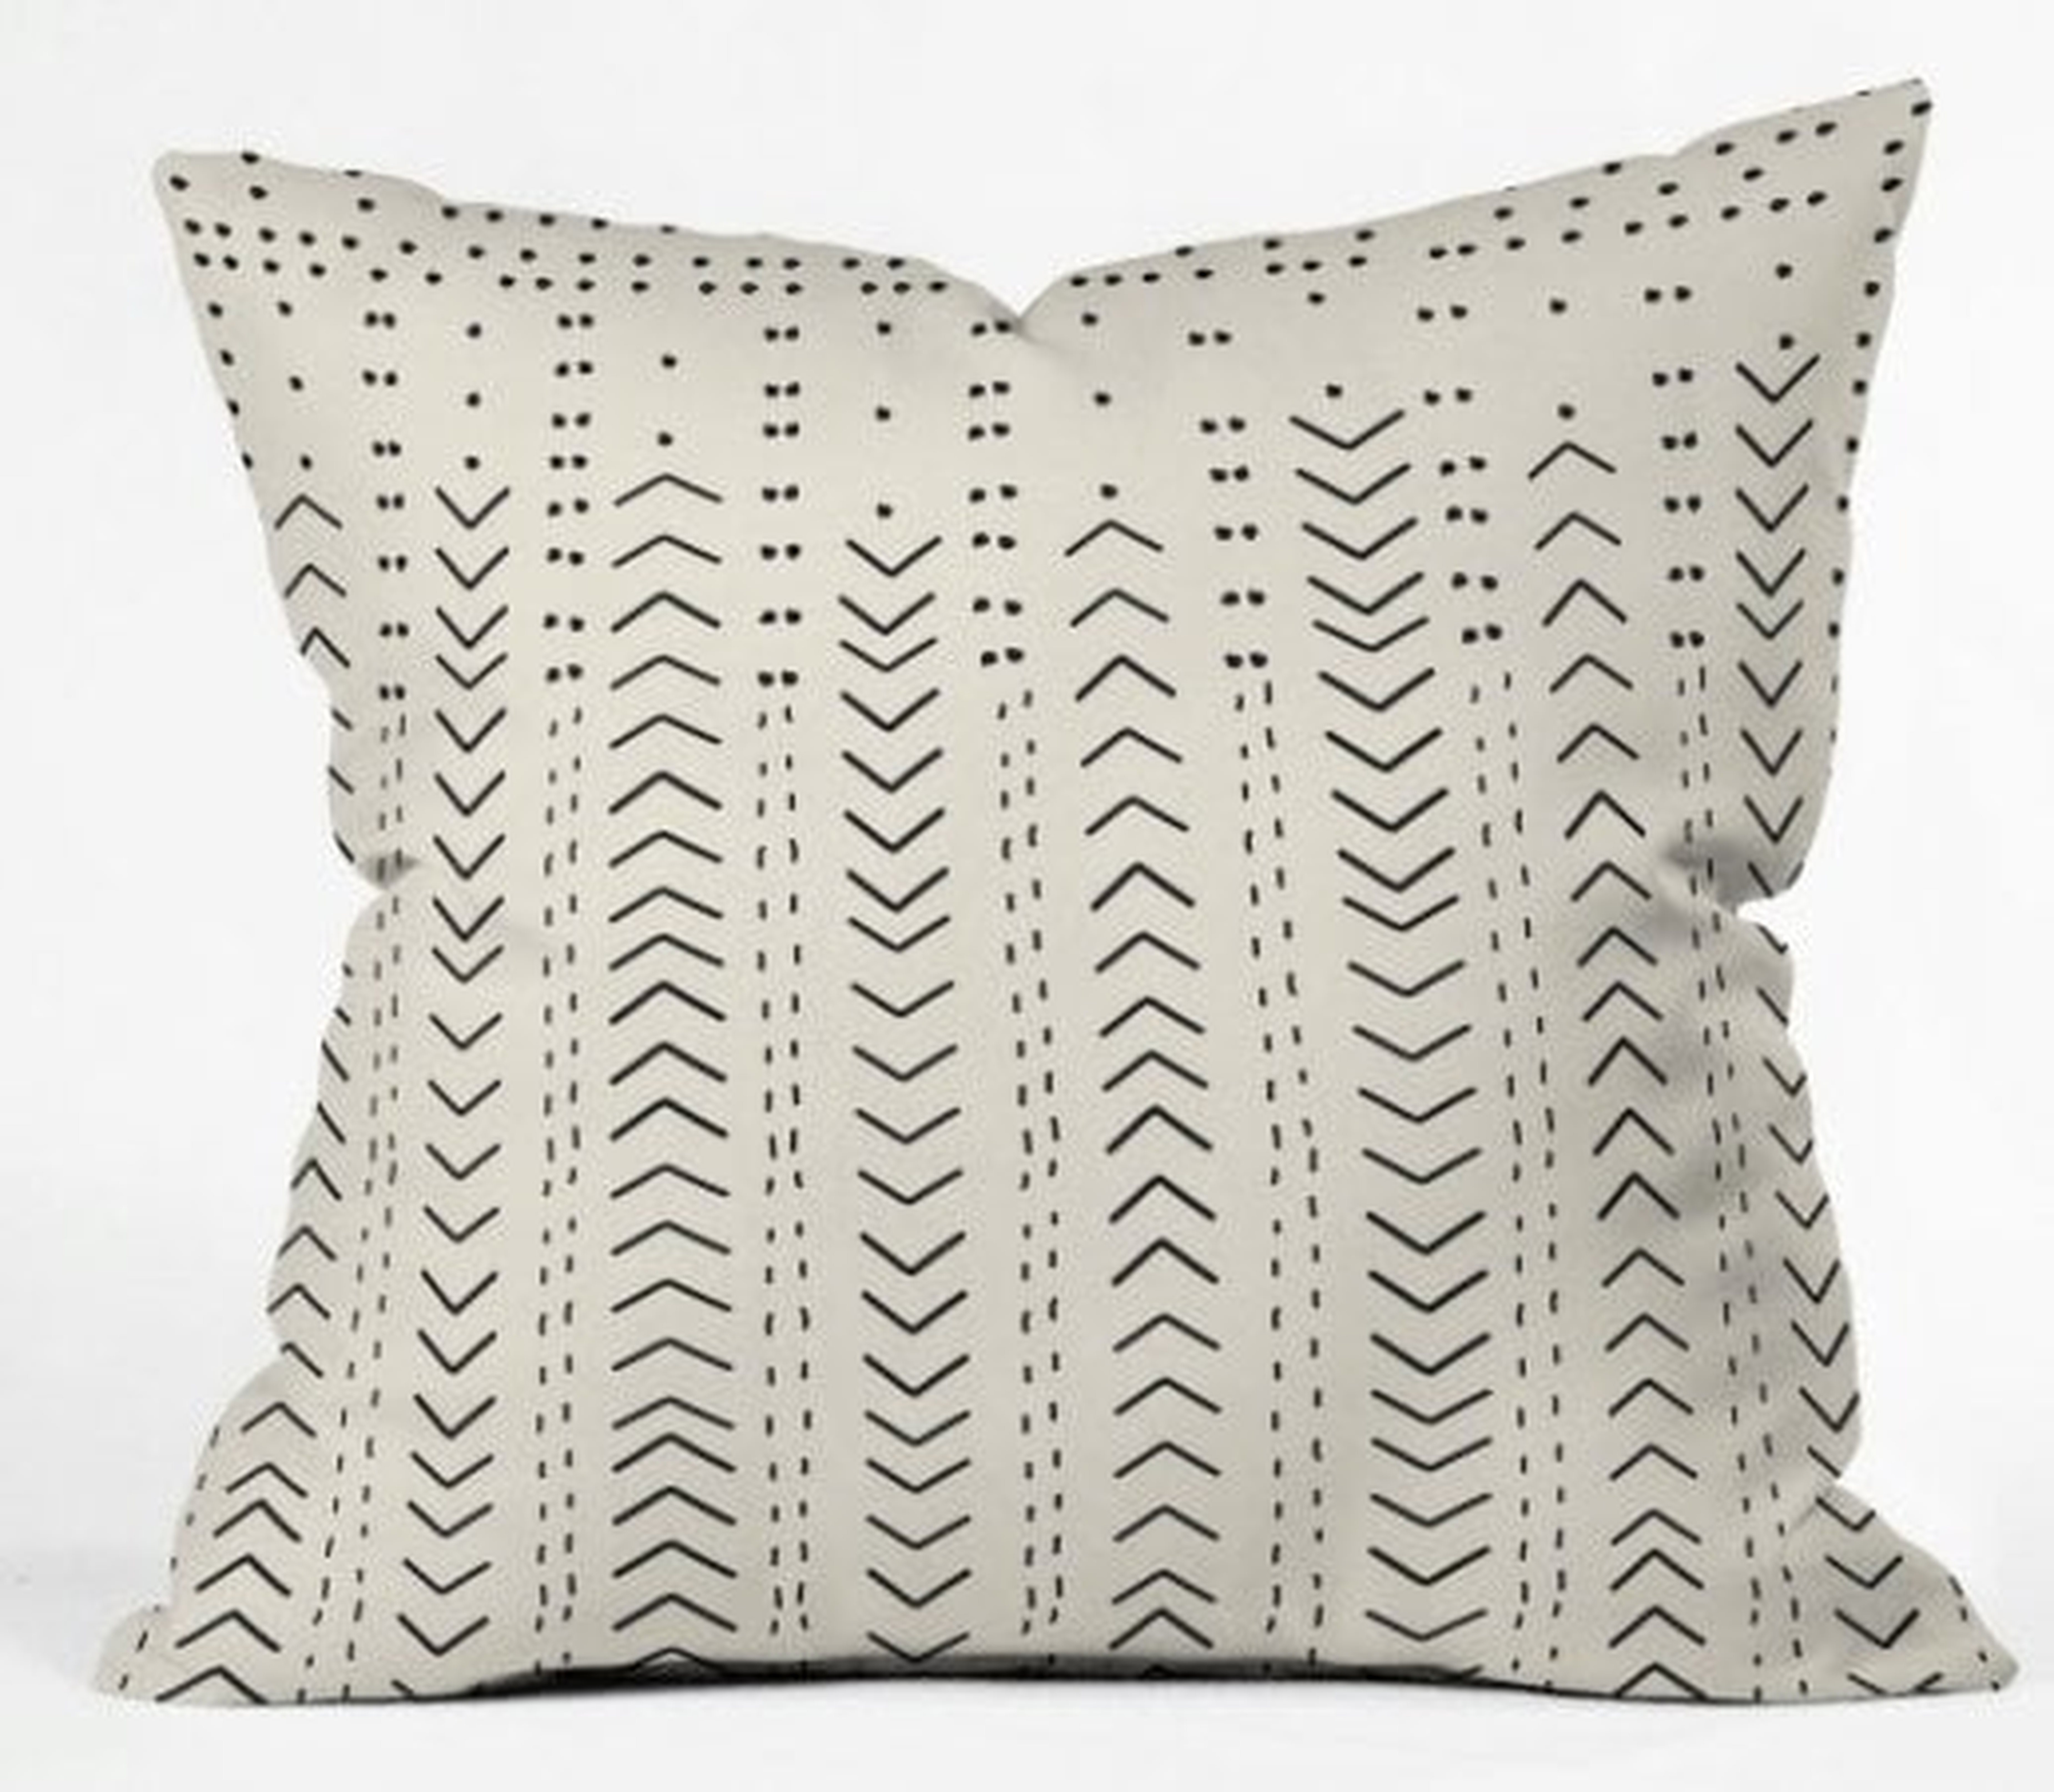 Iveta Abolina Mud Cloth Inspo VIII Throw Pillow Cover - 18x18  - Wander Print Co.